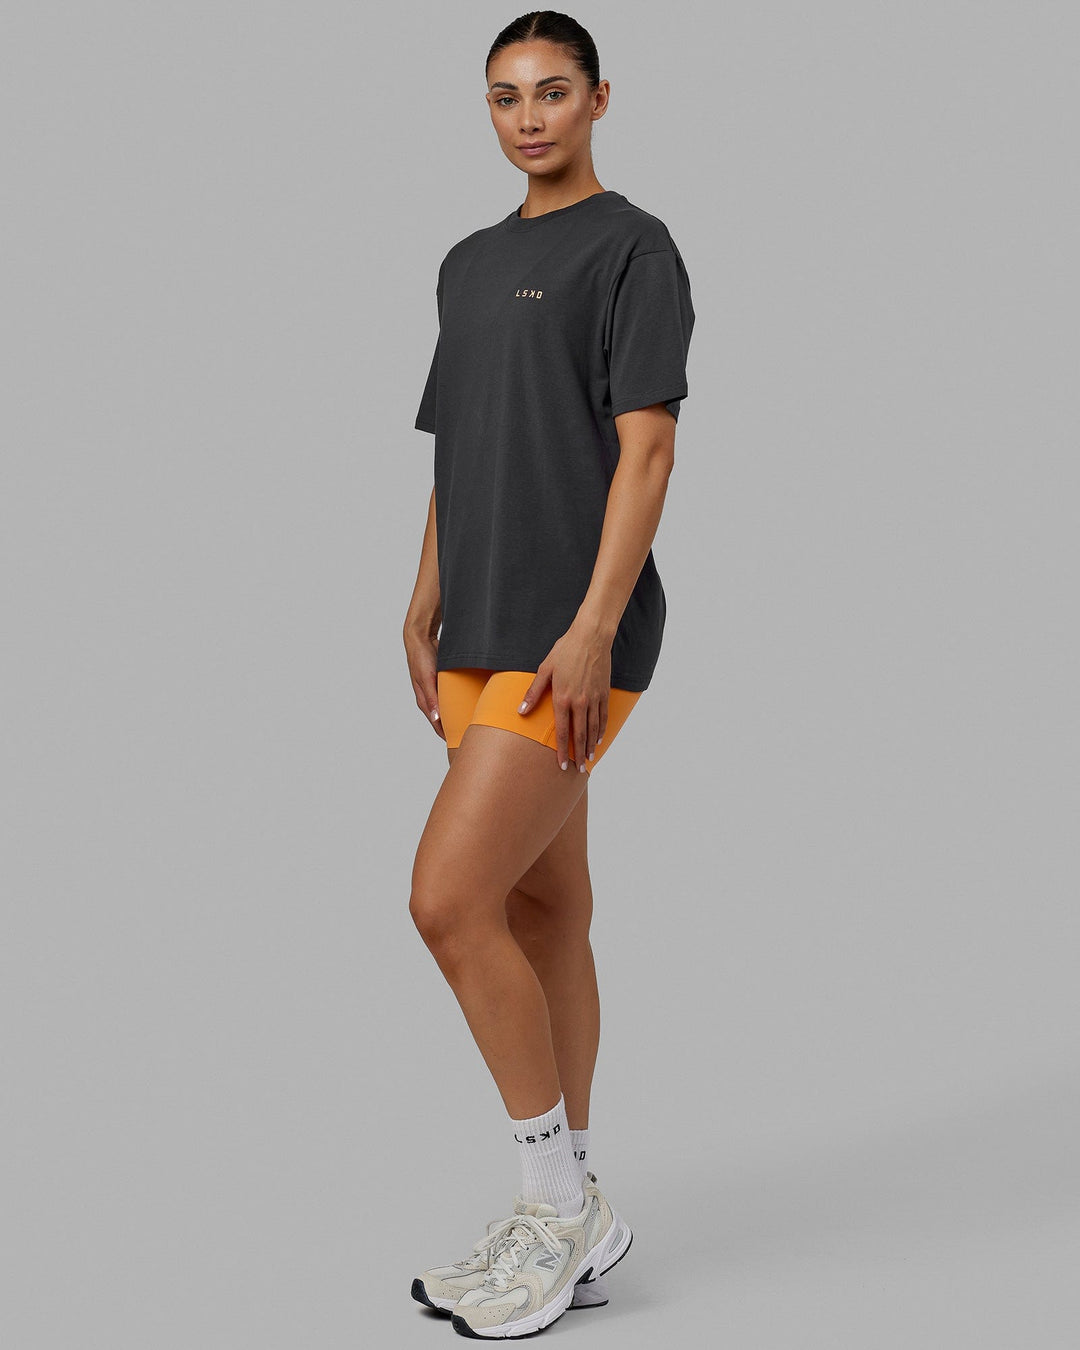 Woman wearing Unisex VS2 FLXCotton Tee Oversize - Phantom-Tangerine